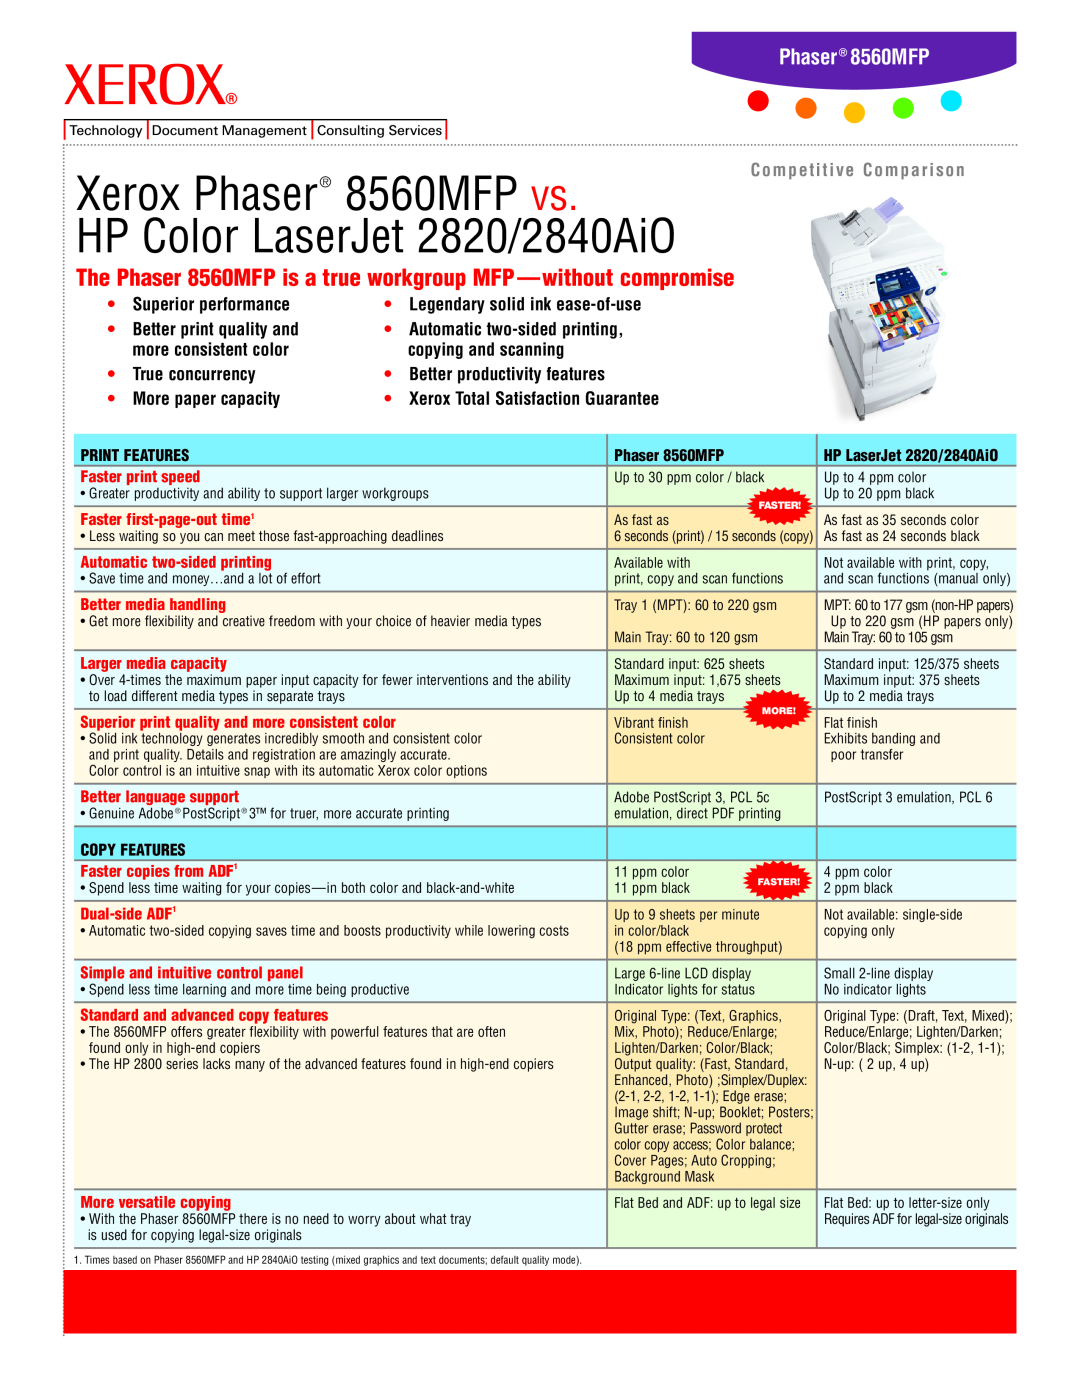 Xerox manual Hurtig betjeningsvejledning Pikaopas, Phaser 8560MFP, Quick Use Guide, multifunction product 